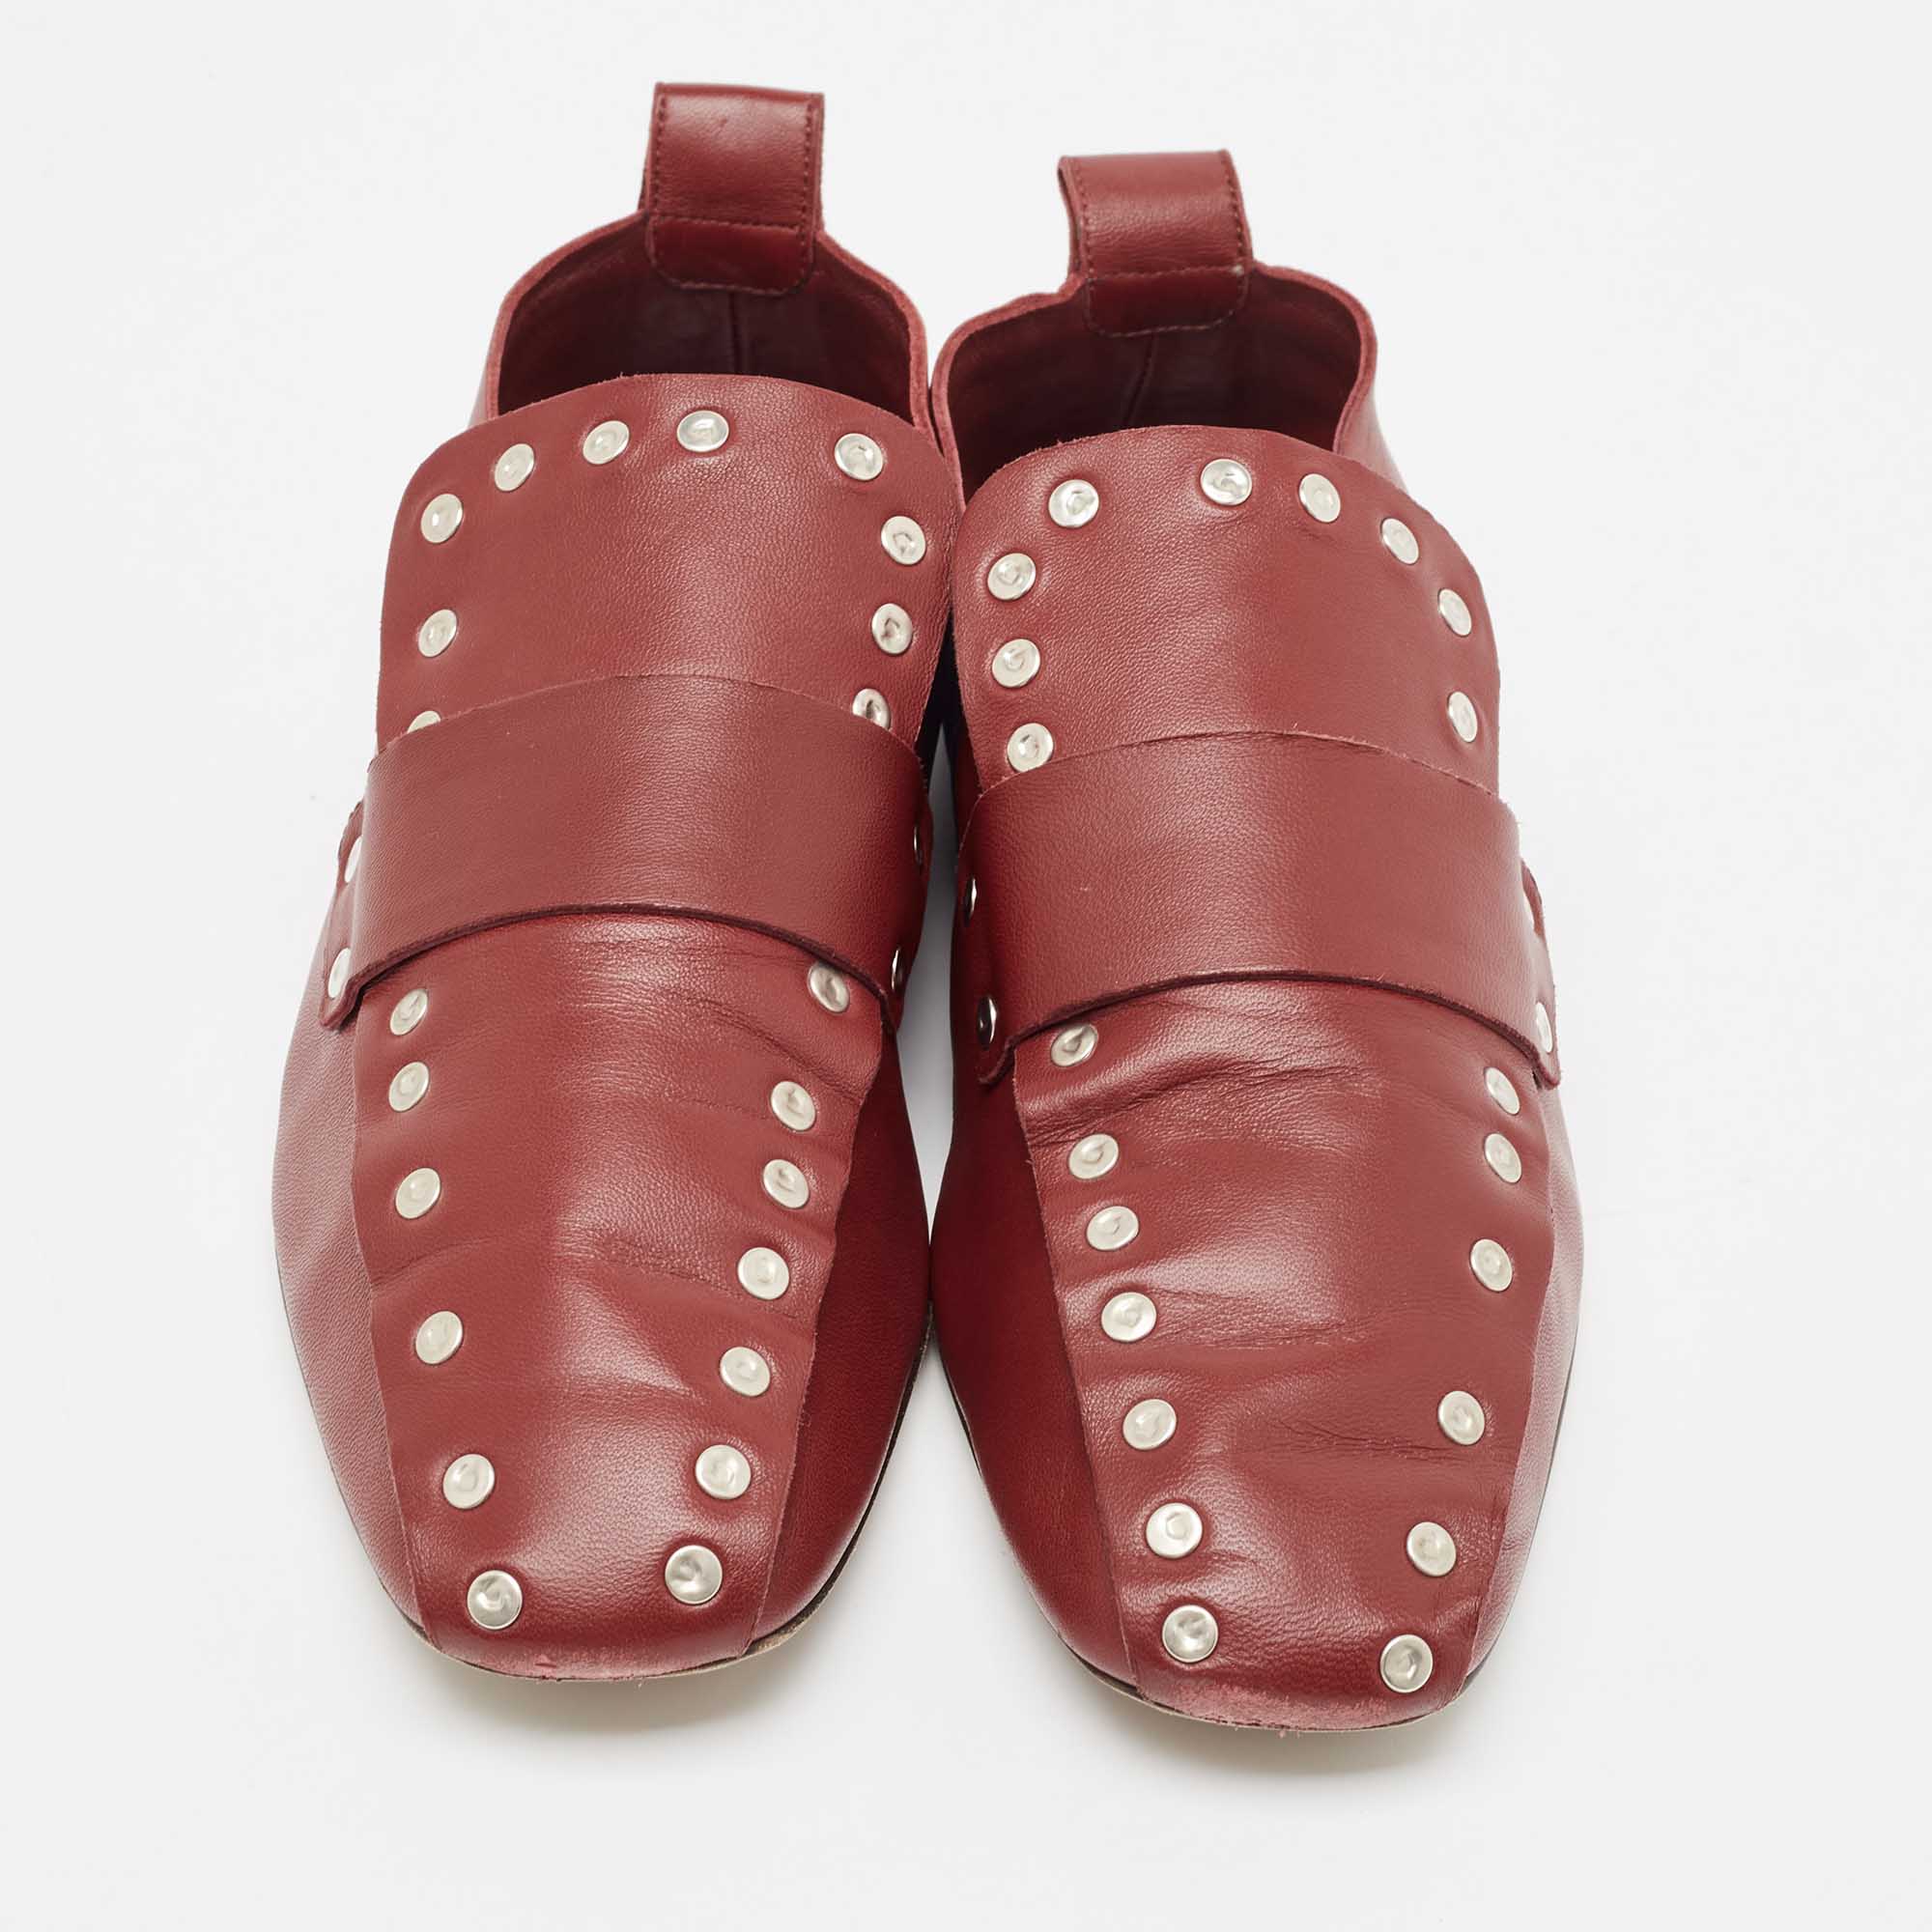 Celine Red Leather Slip On Loafers Size 38